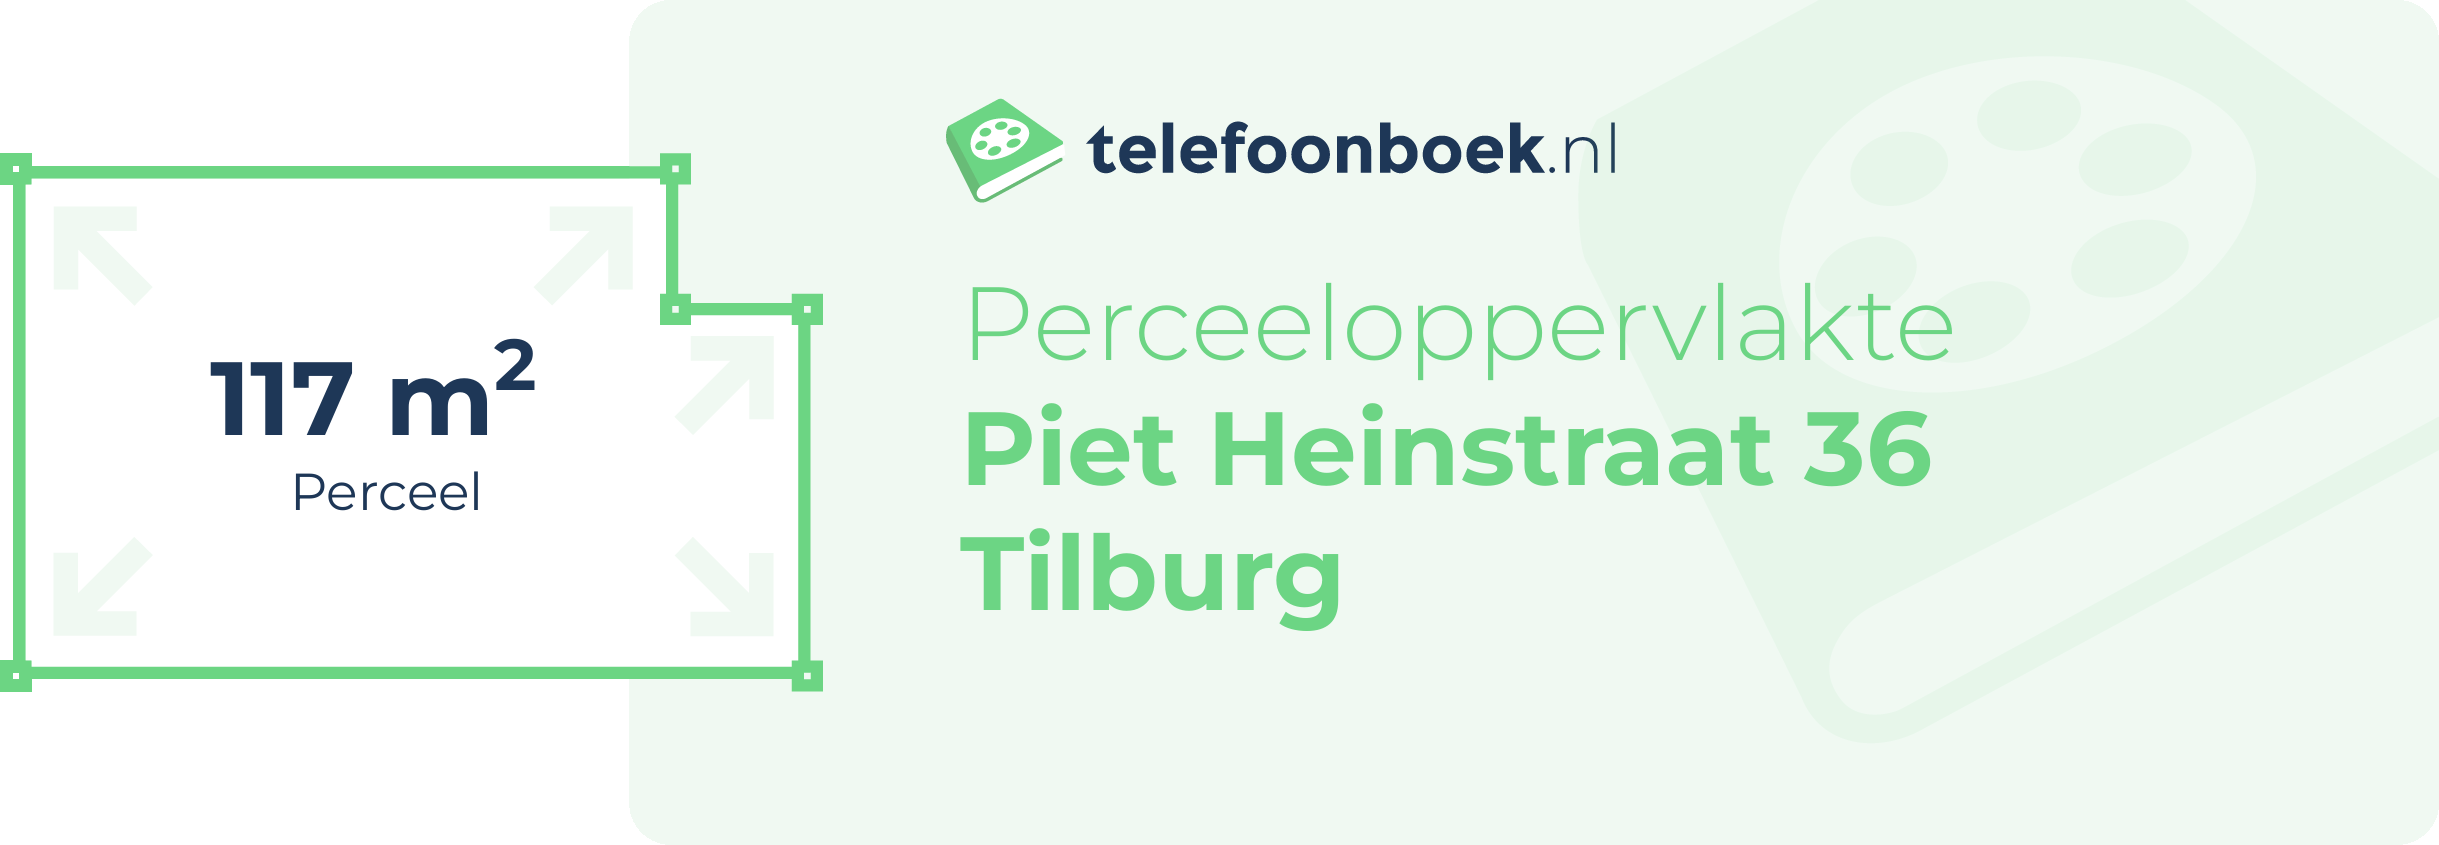 Perceeloppervlakte Piet Heinstraat 36 Tilburg